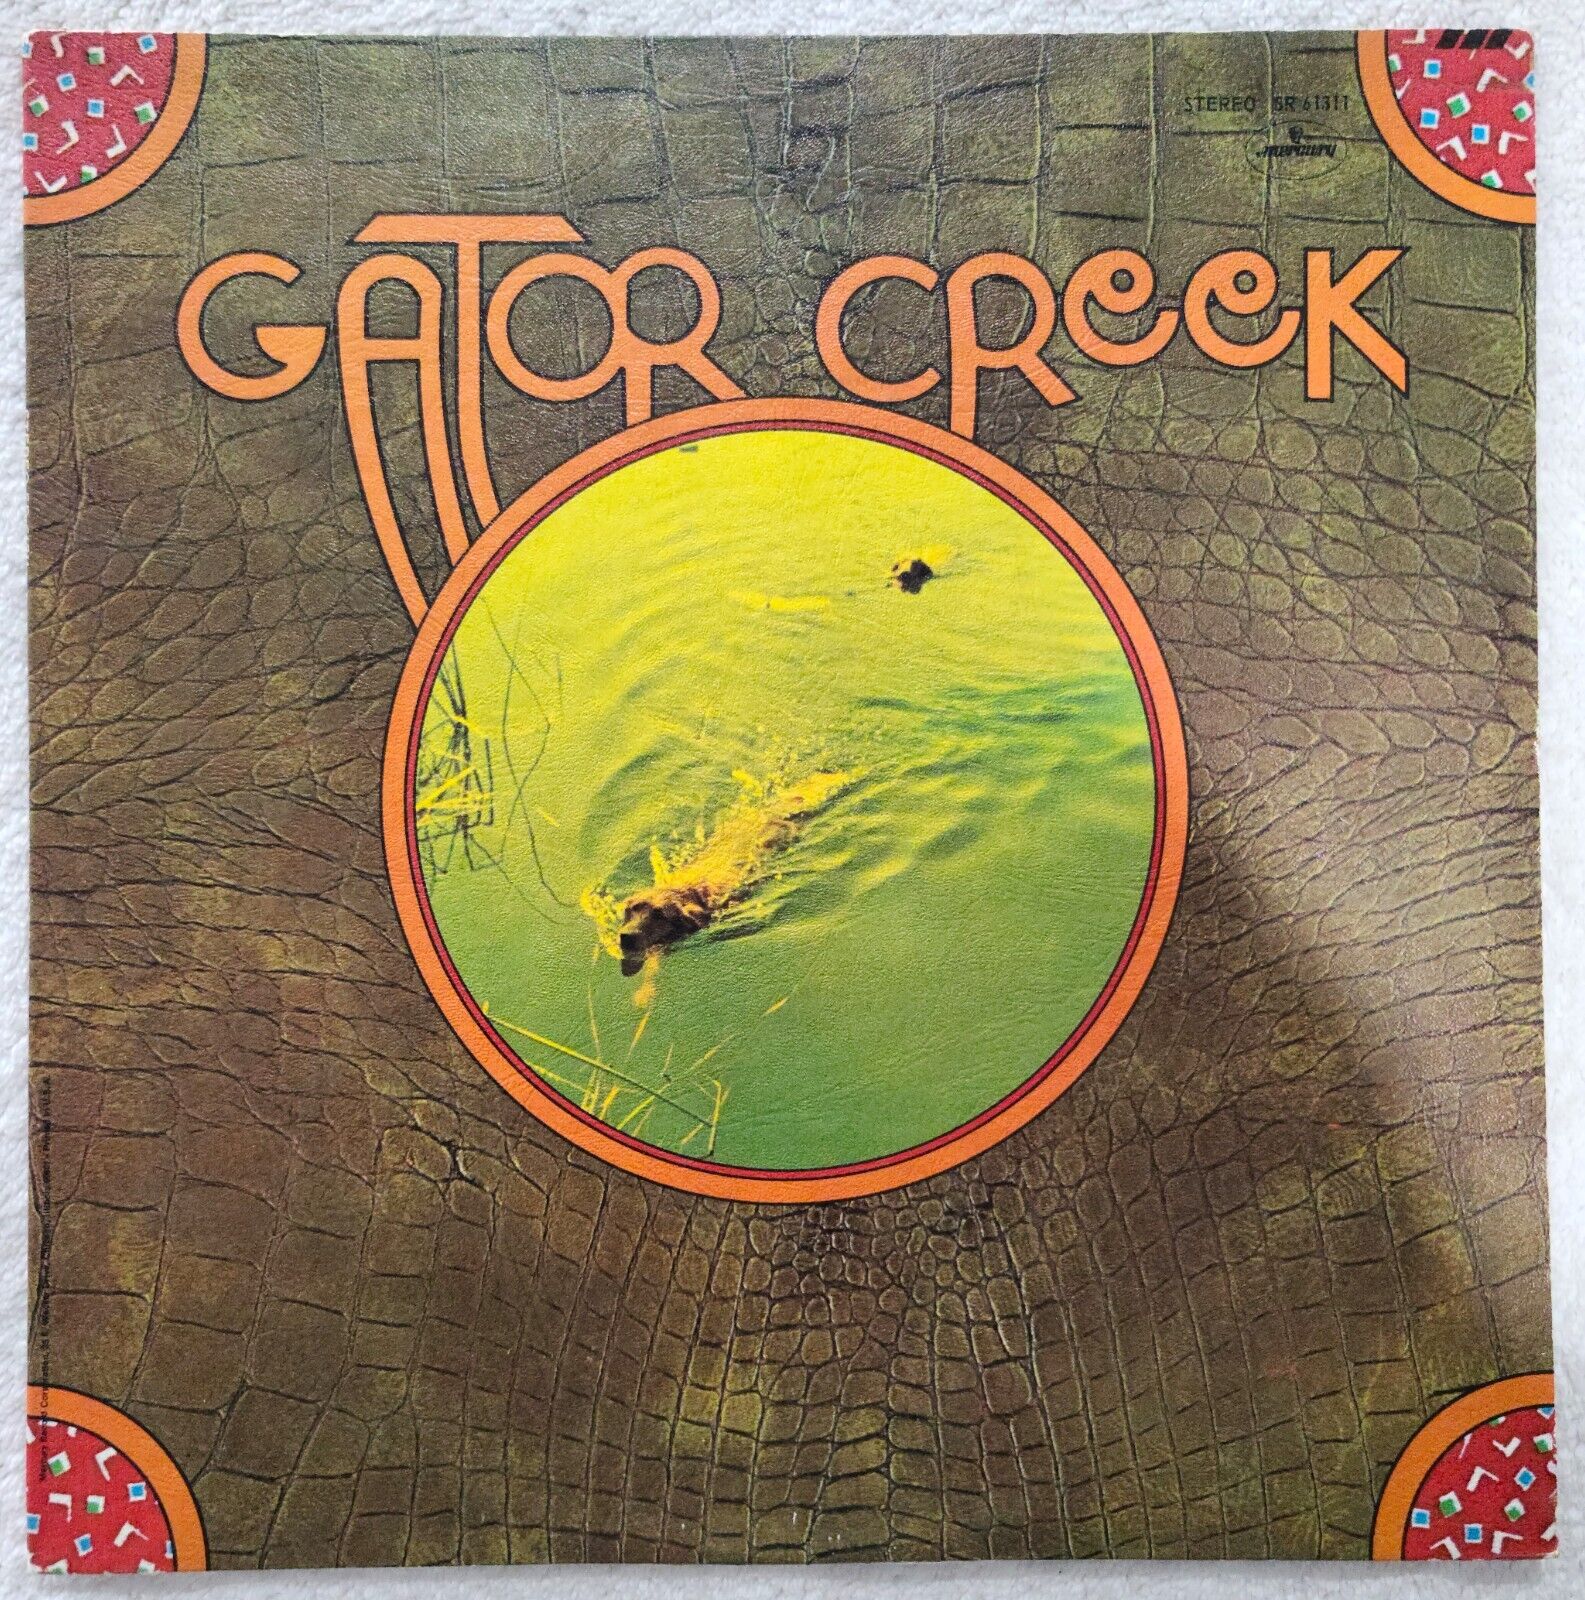 GATOR CREEK - SELF-TITLED (original Mercury label)